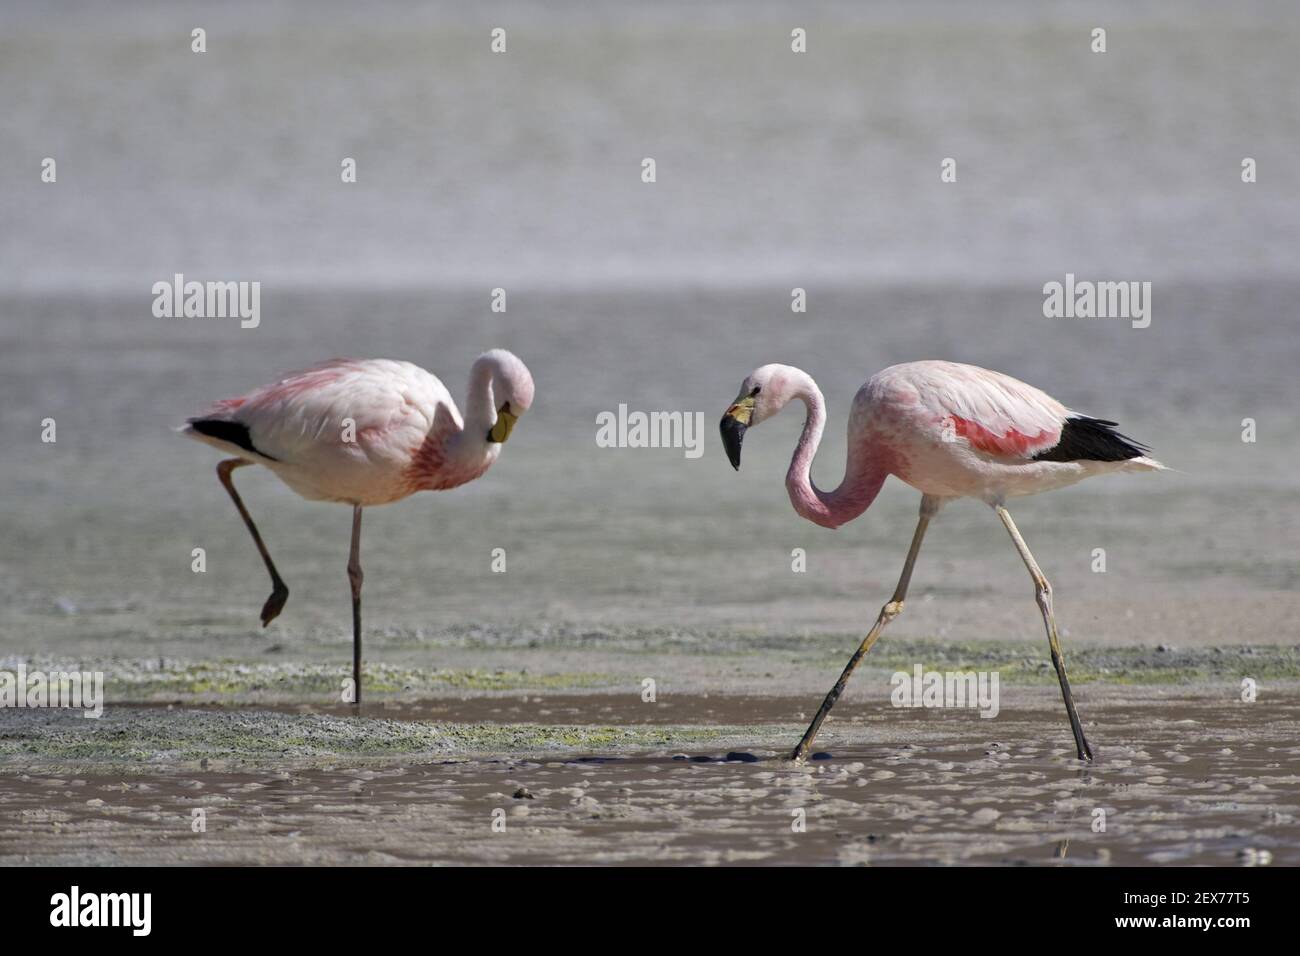 Flamingos (Phoenicoparrus), Bolivien, Altiplano, Suedamerika, Flamingos (Phoenicoparrus), Altiplano, Bolivia, South America Stock Photo